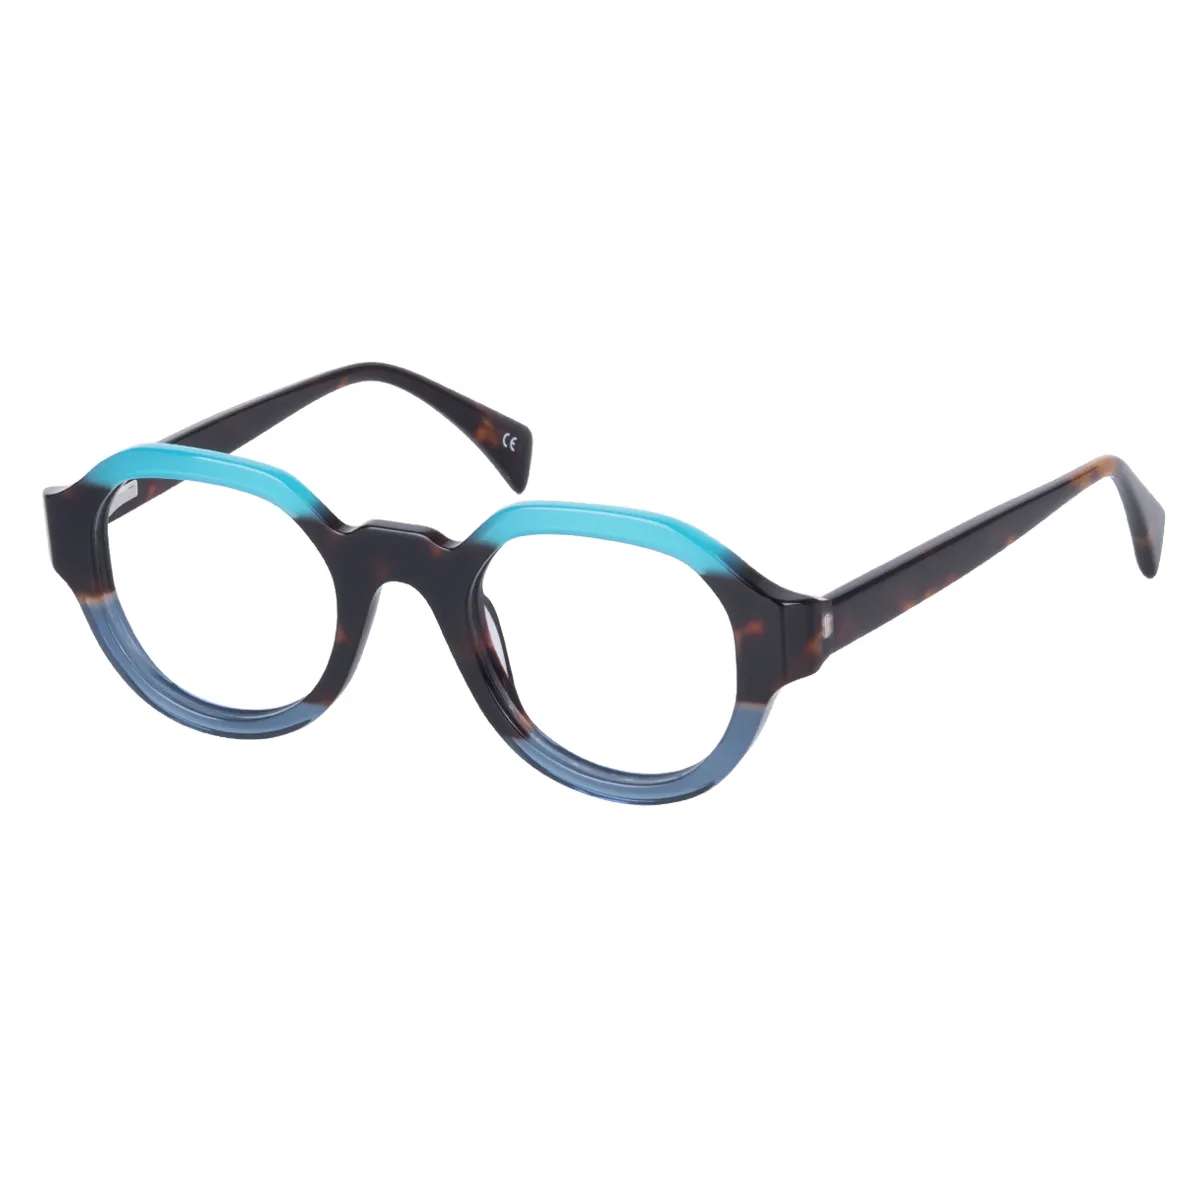 Amber - Round Brown-Blue Glasses for Men & Women - EFE